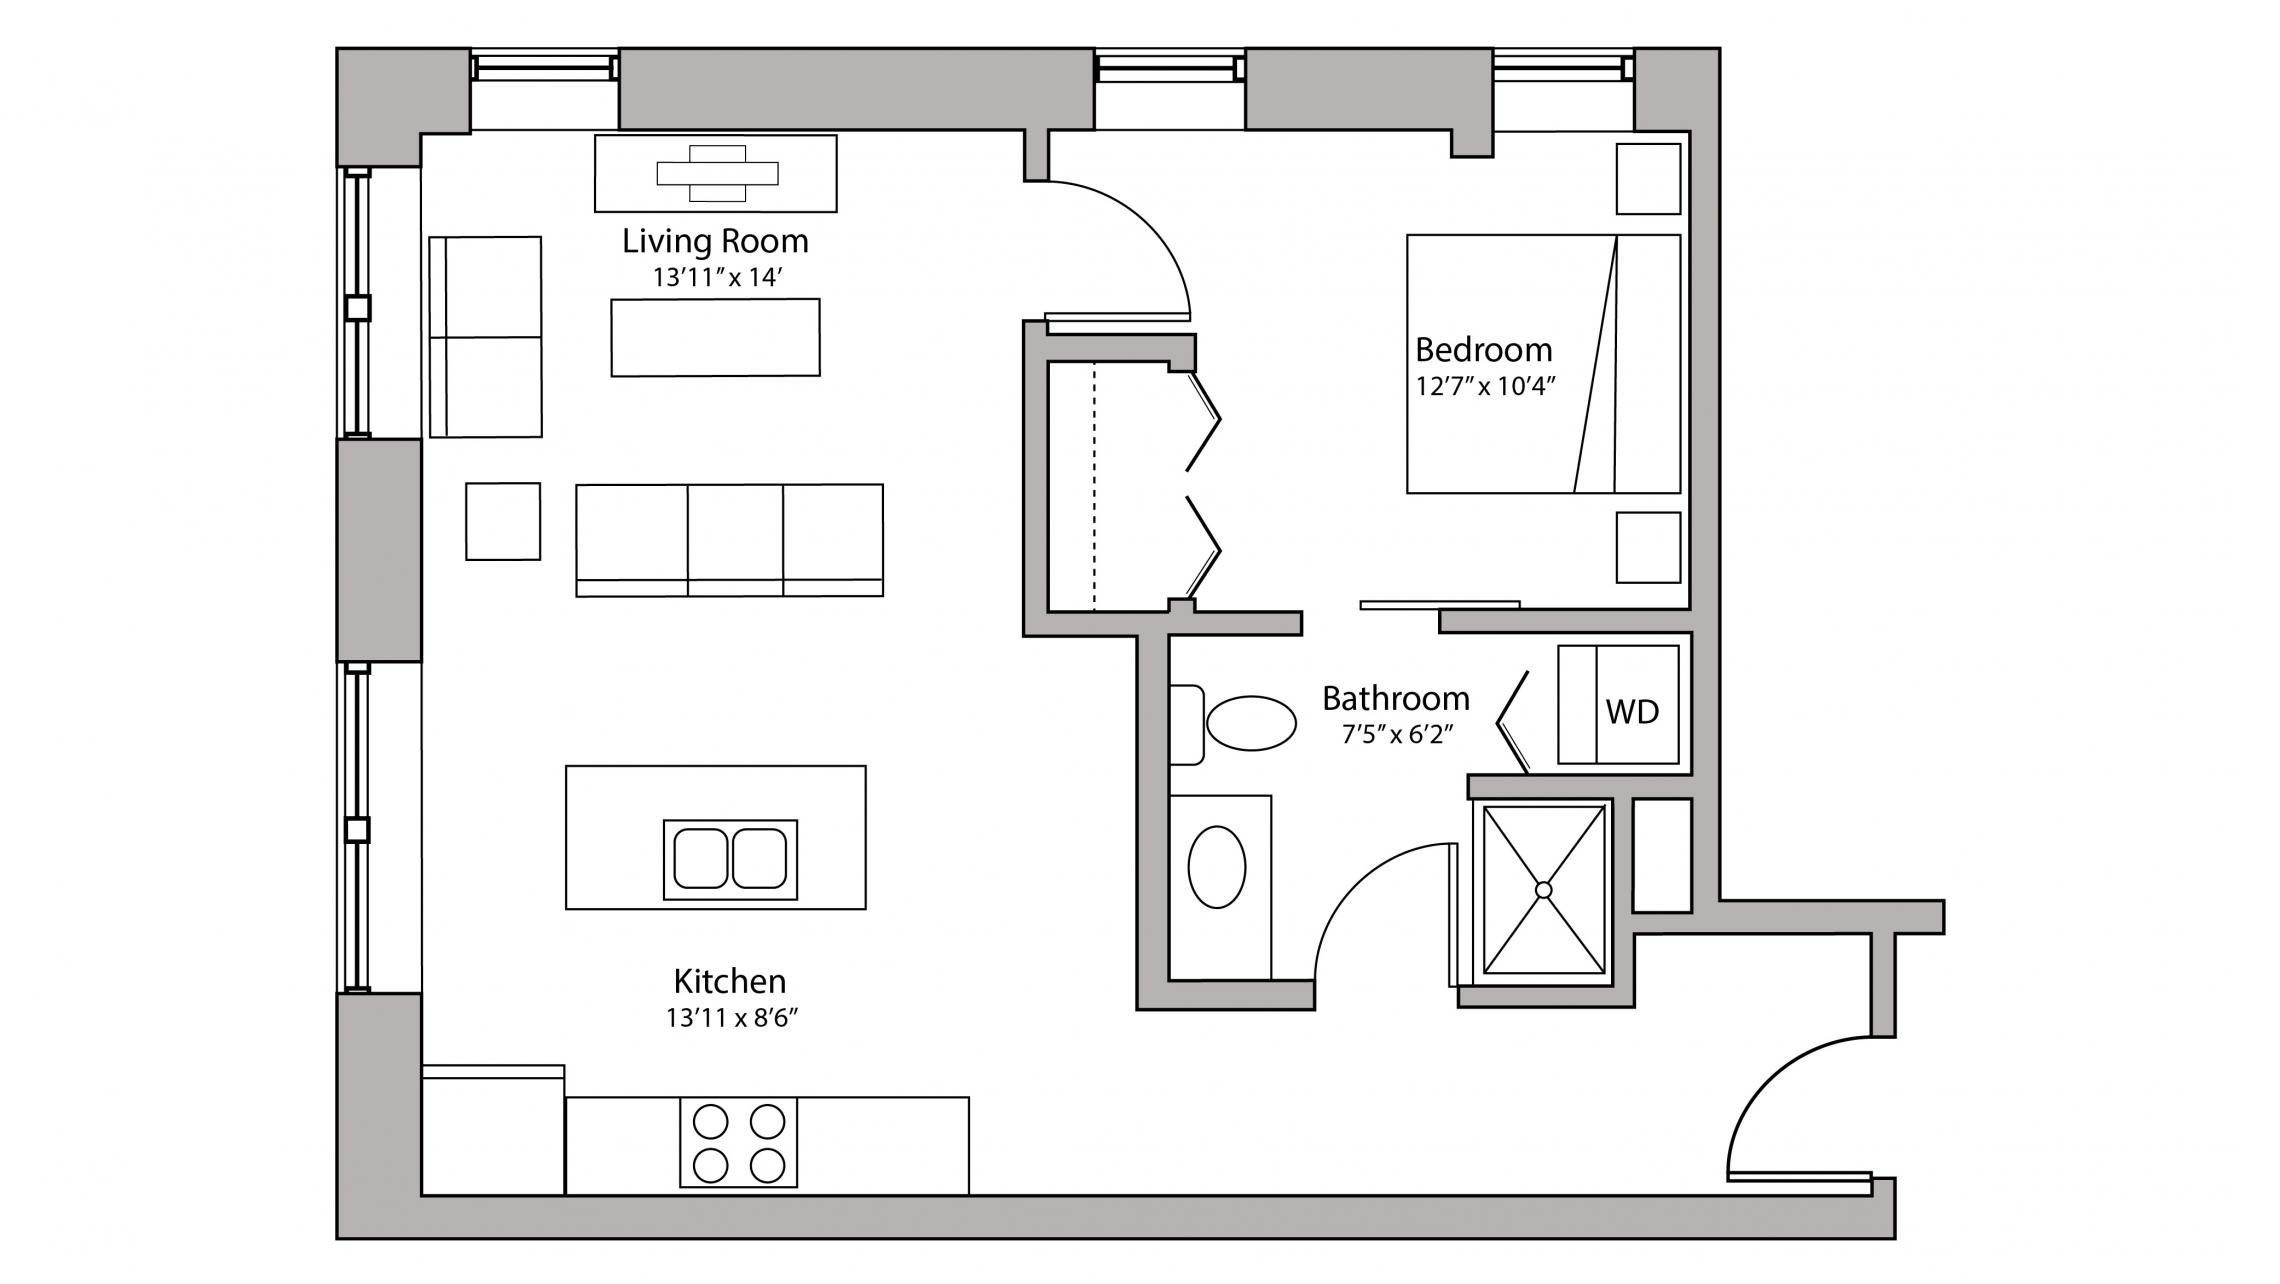 ULI Capitol Hill 307 - One Bedroom, One Bathroom